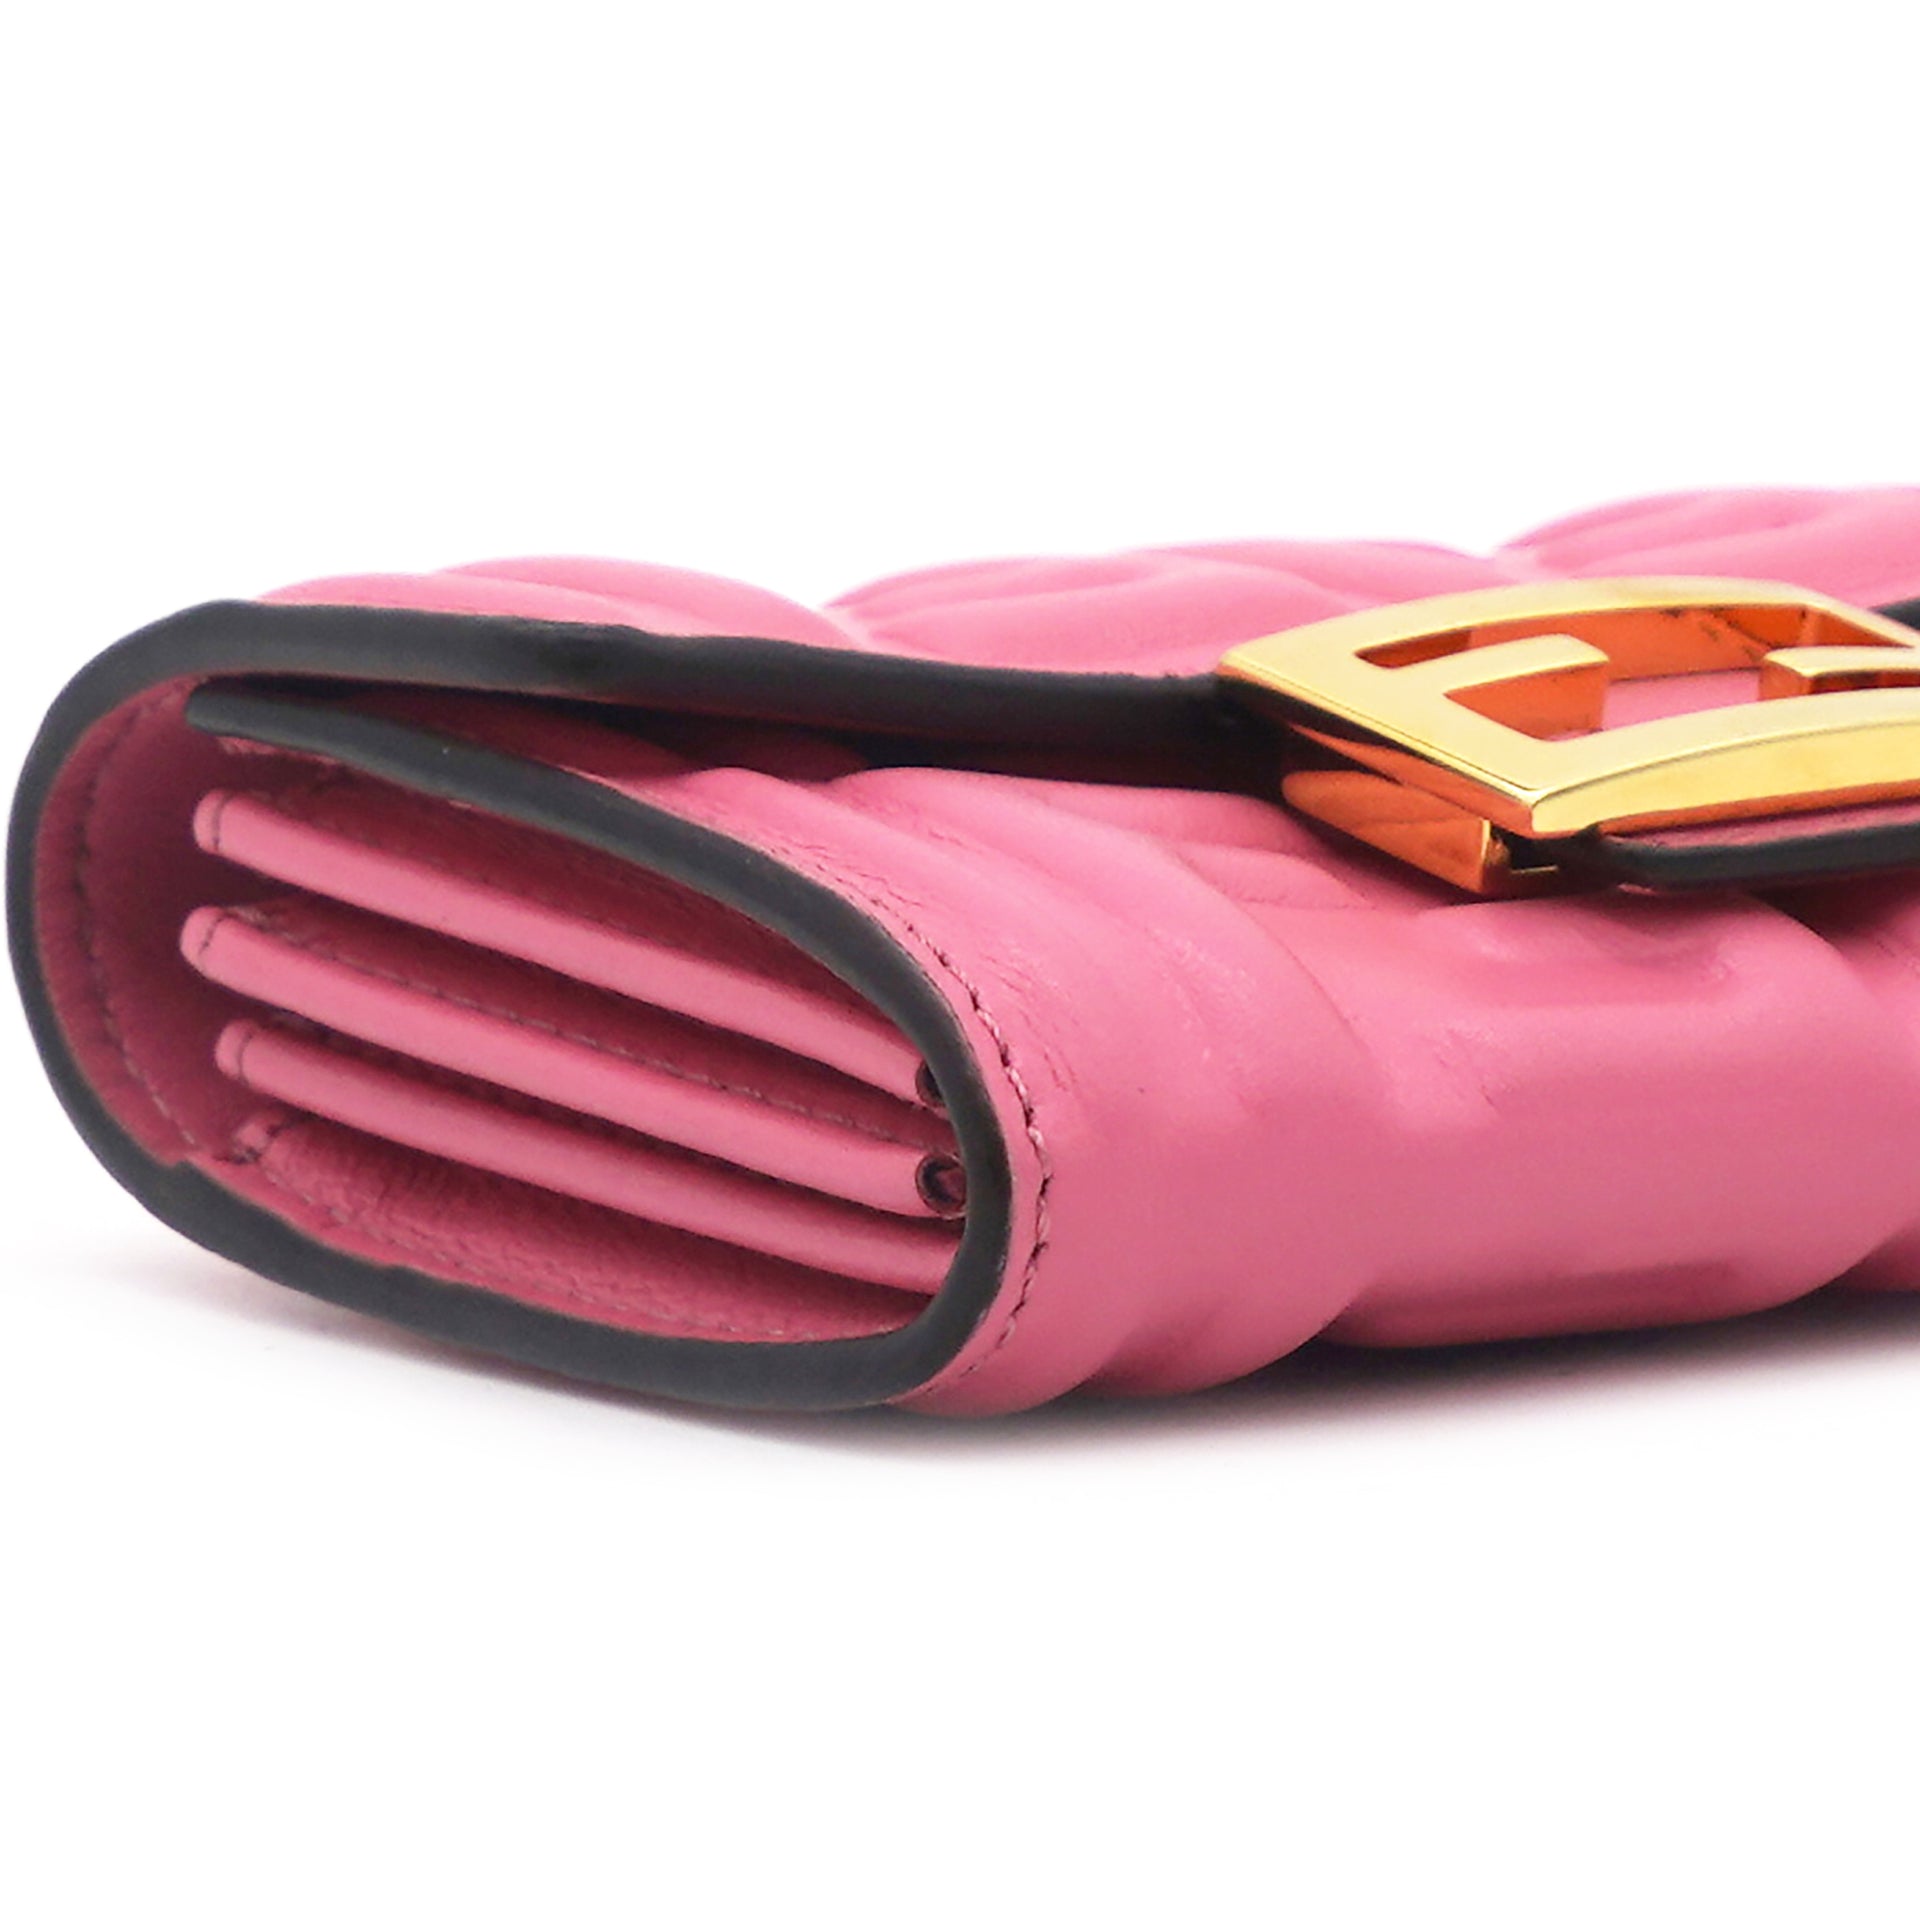 Baguette Mini - Red FF nappa leather bag